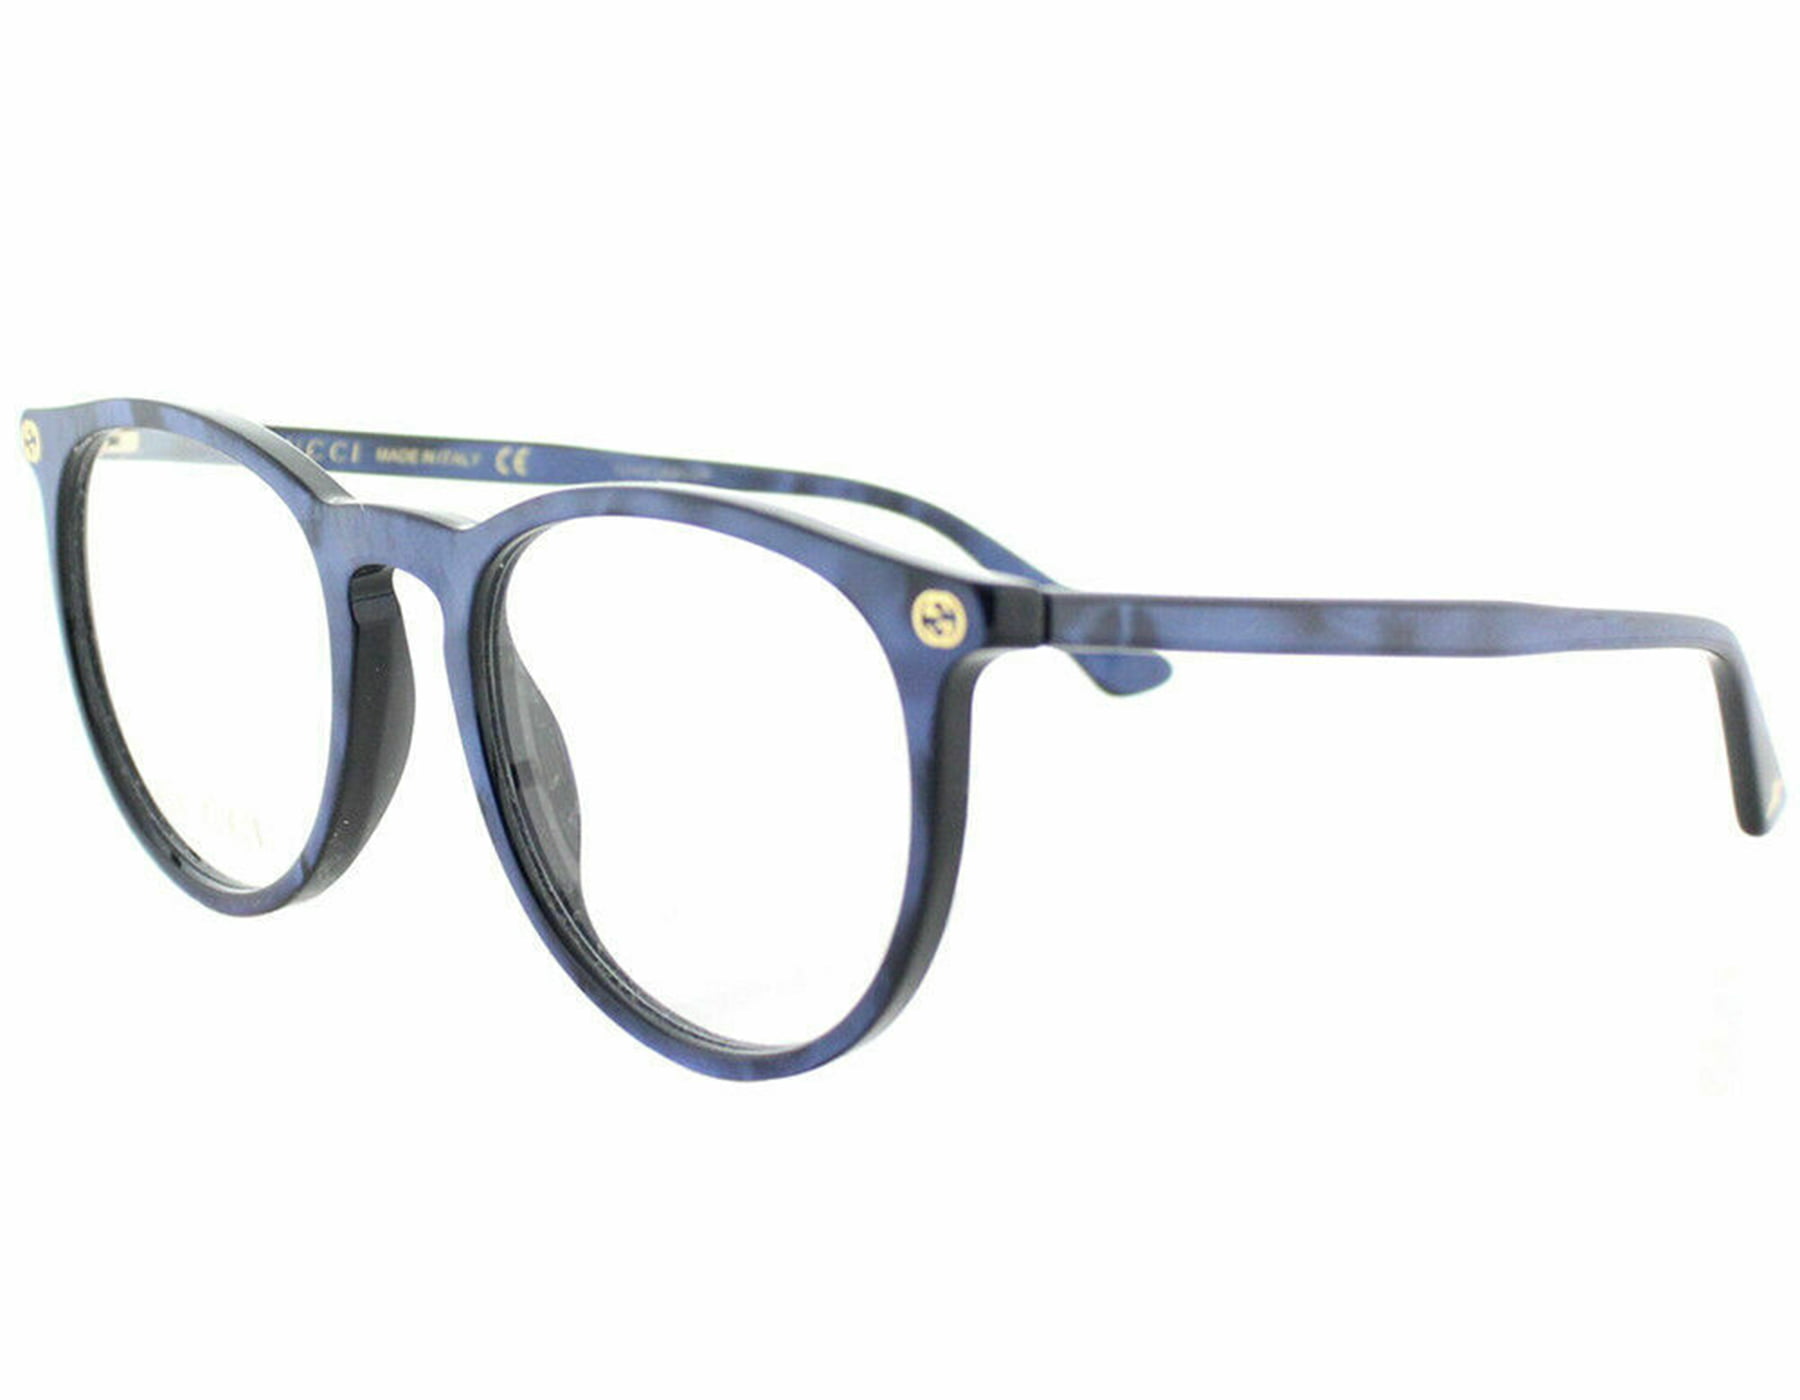 gucci blue eyeglasses